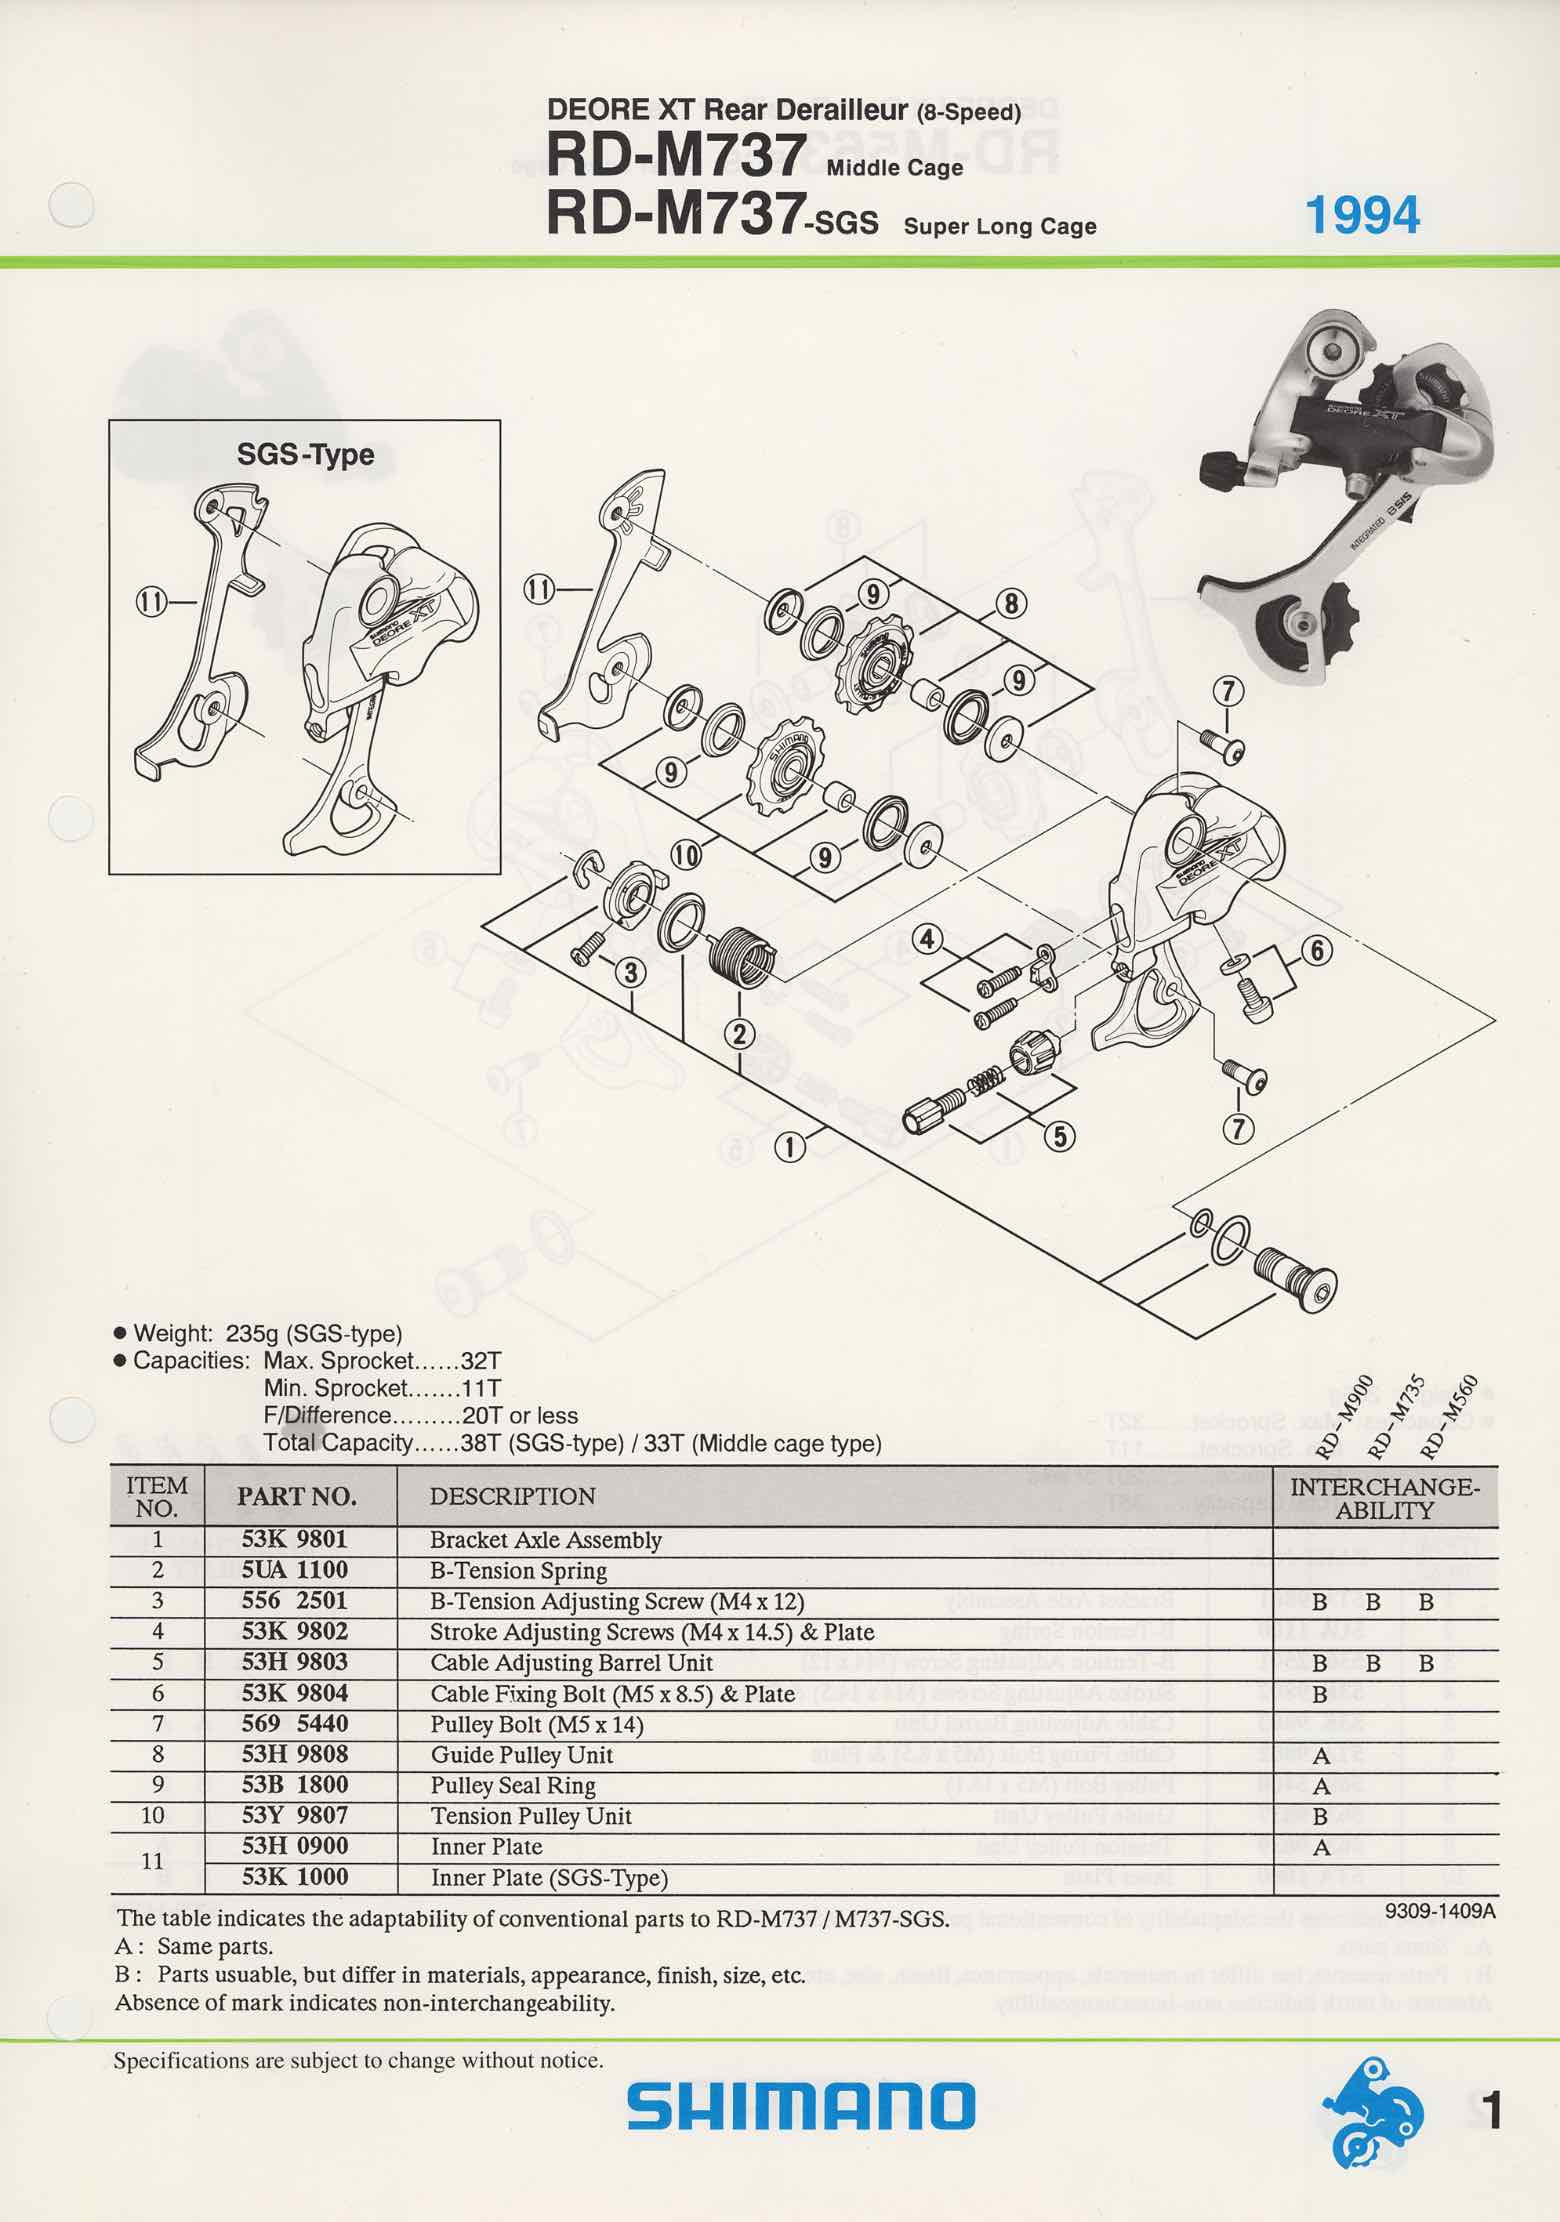 Shimano Spare Parts Catalogue - 1994 to 2004 s5 p1 main image